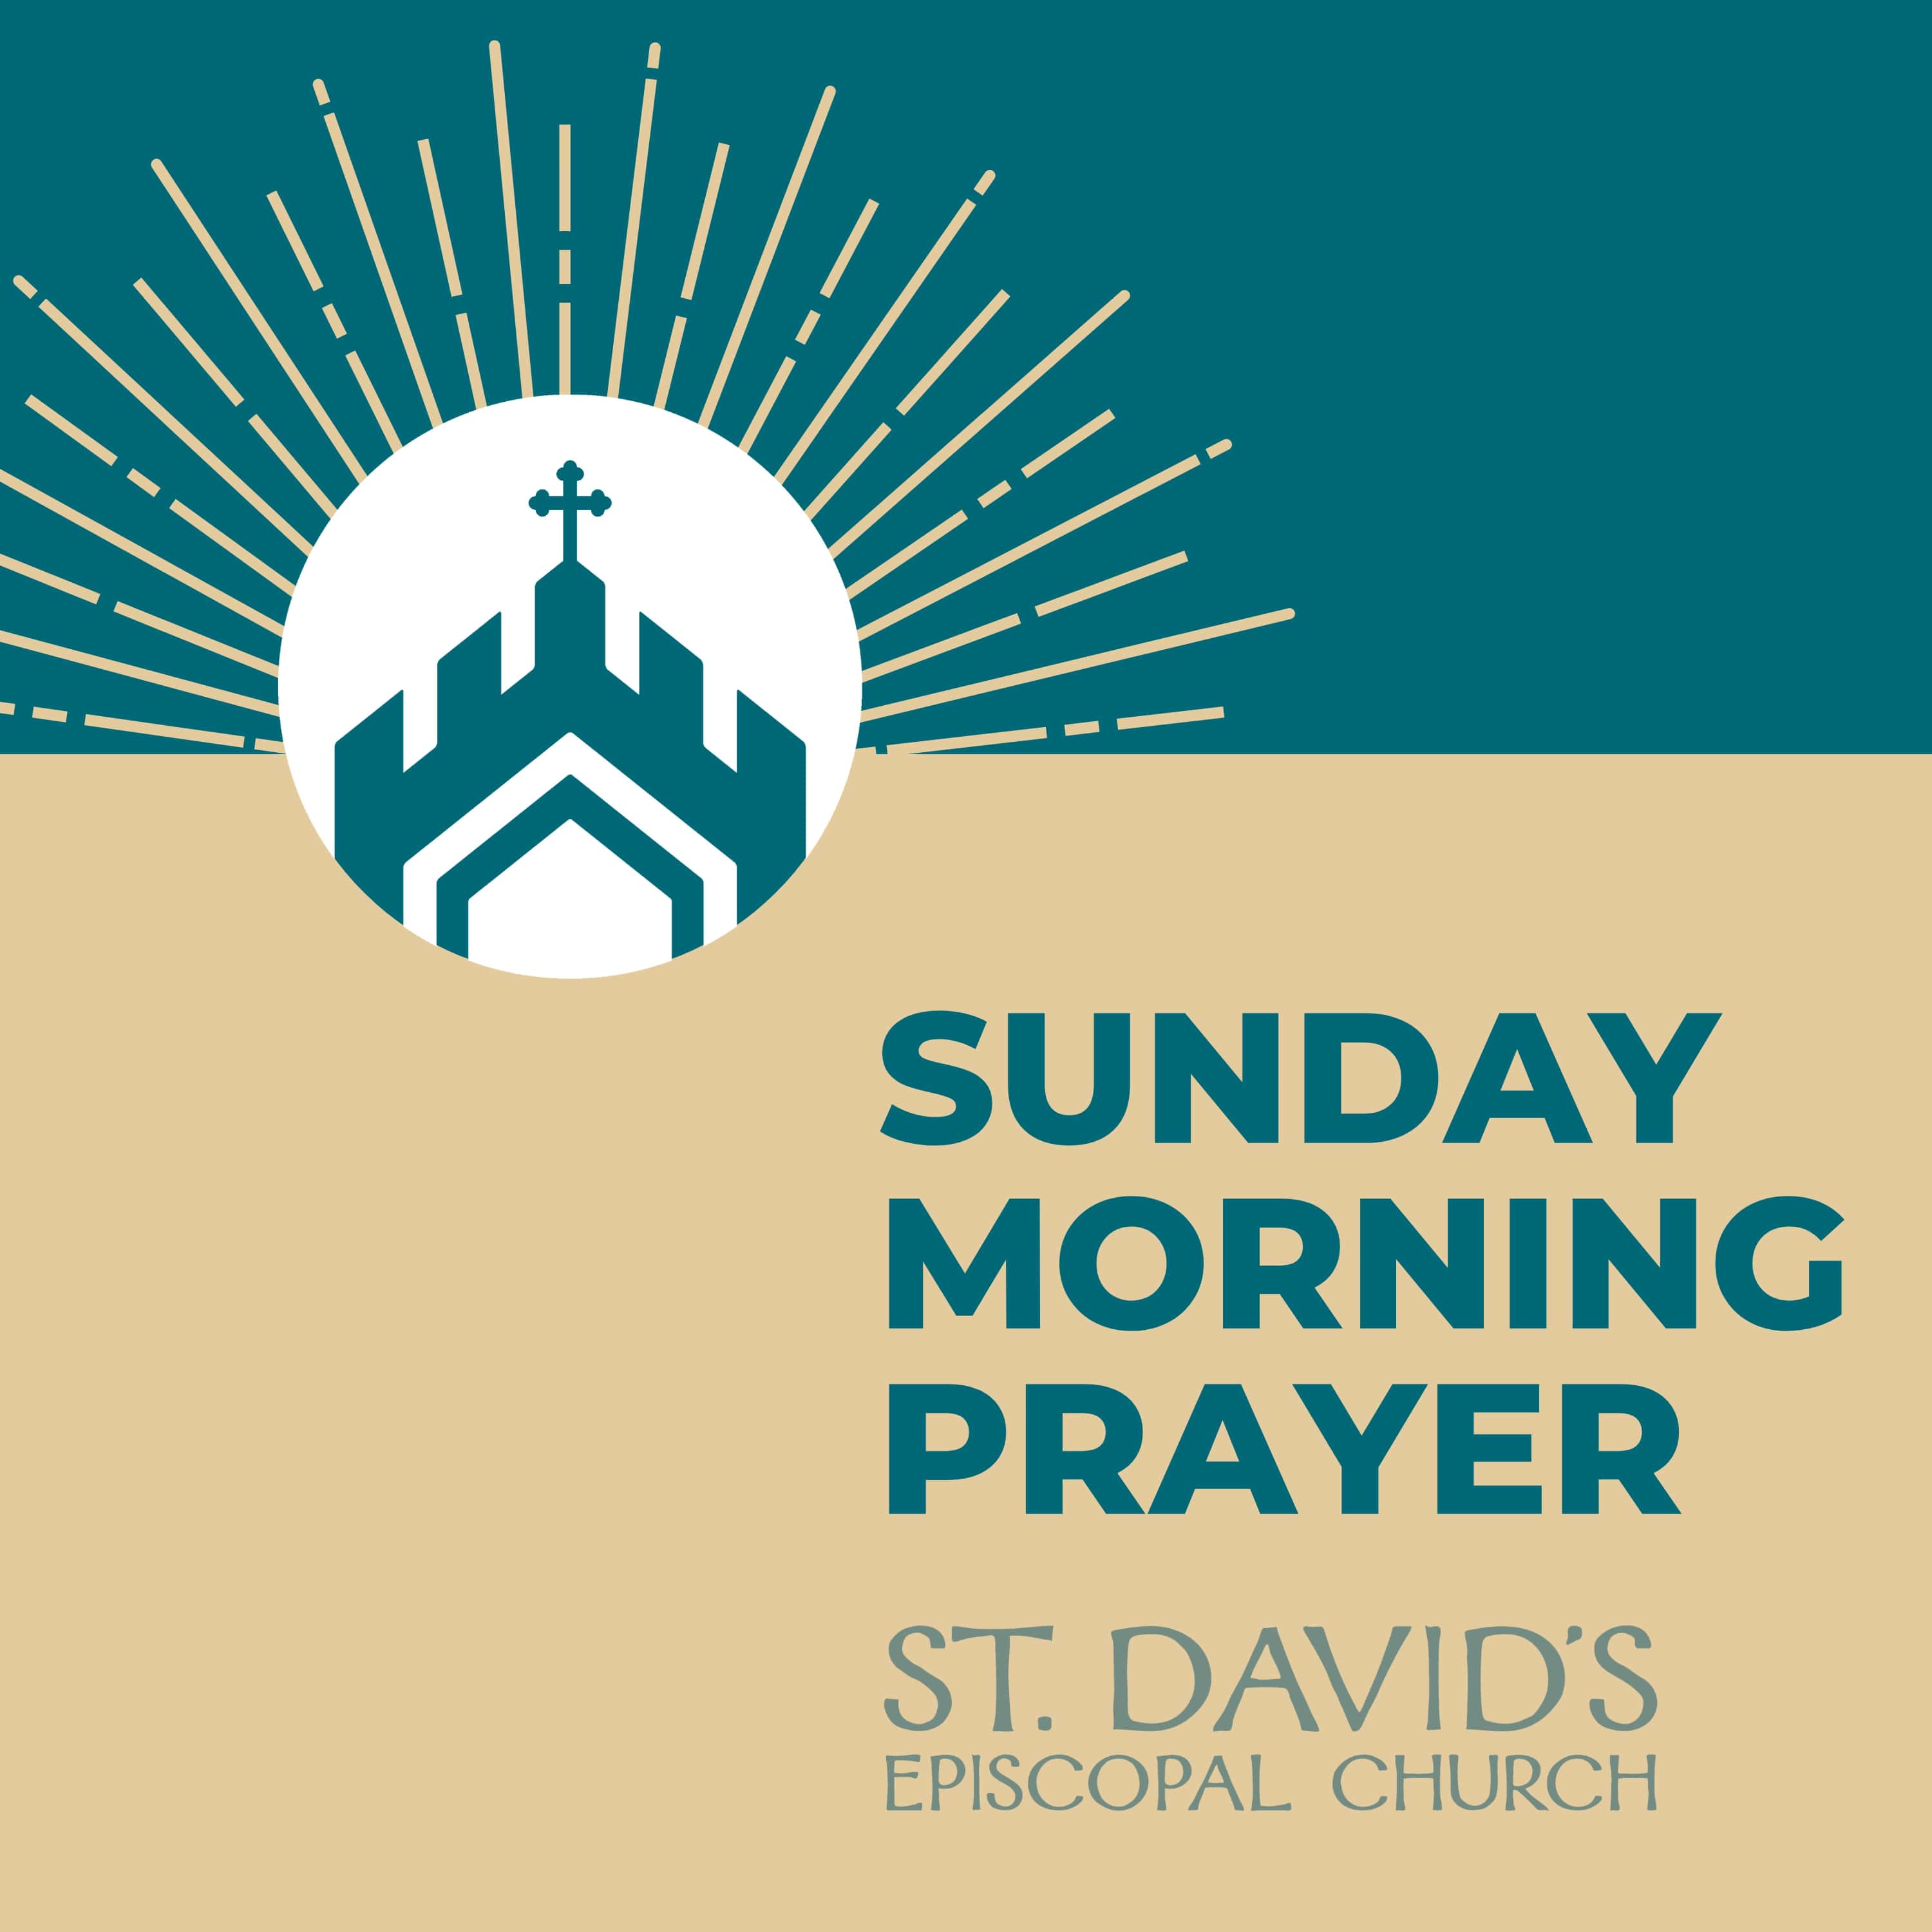 Sunday Morning Prayer: Rite Two, Year 2, 14th Sunday after Pentecost